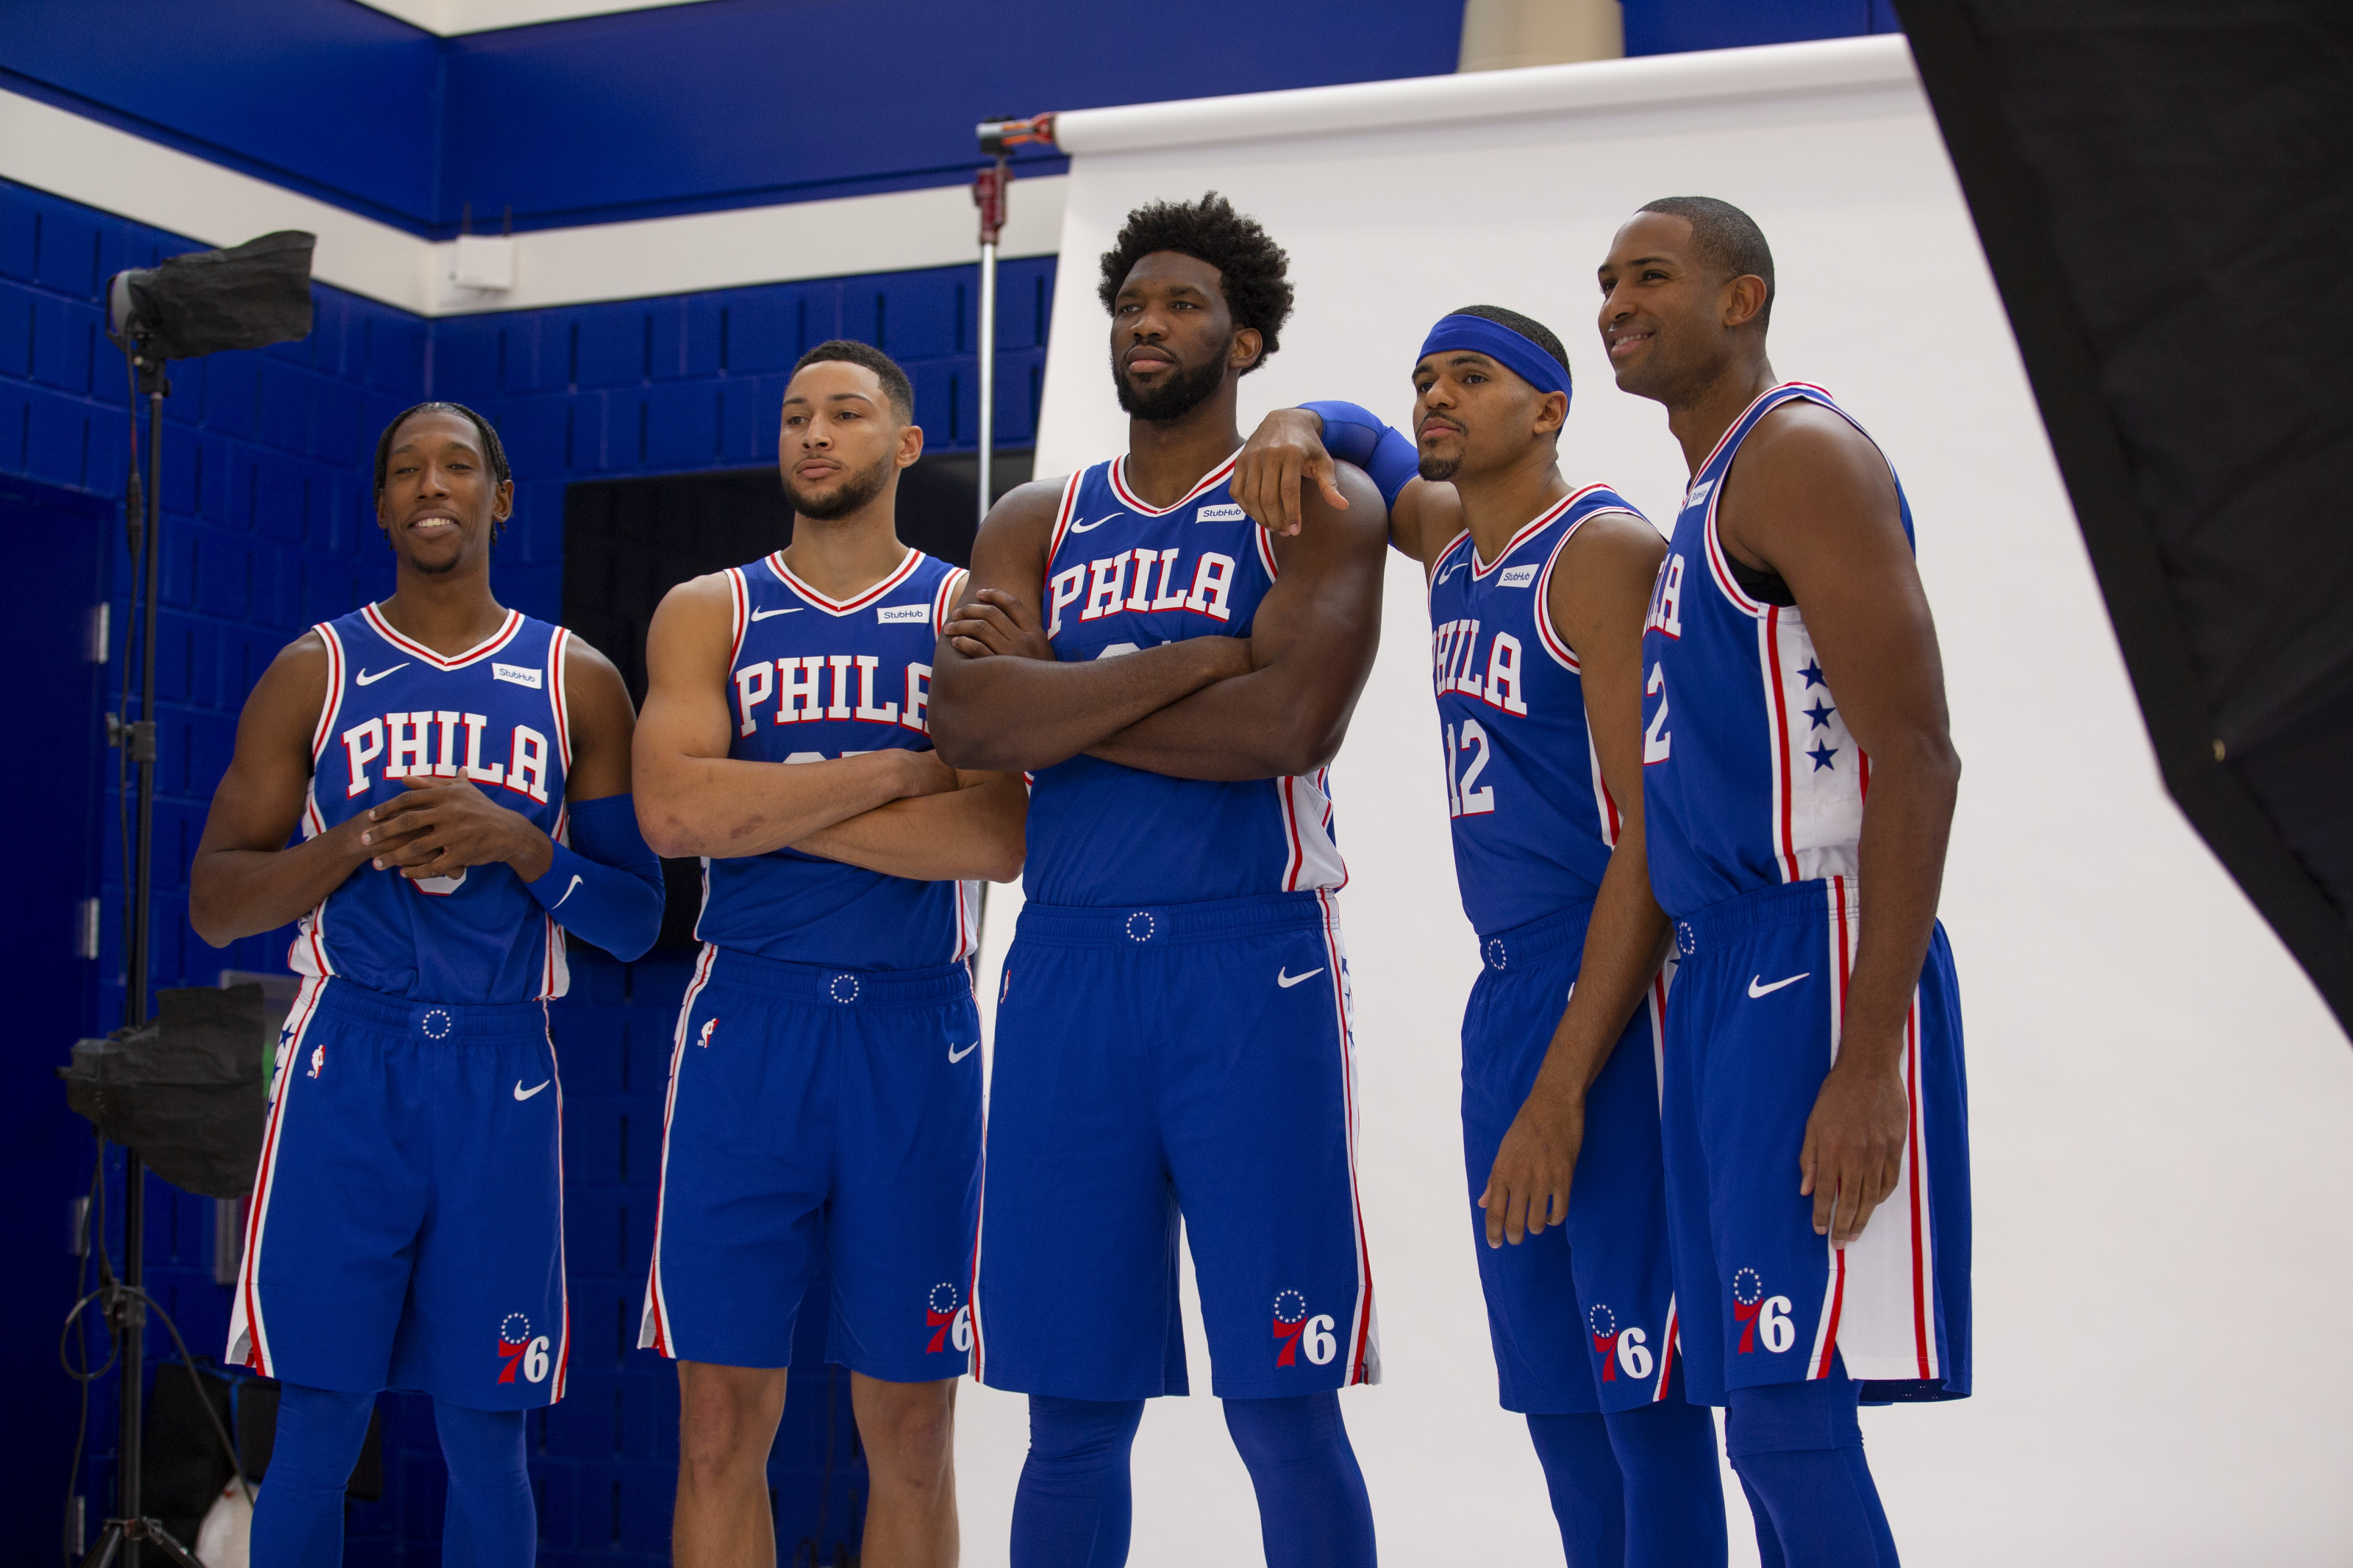 Philadelphia 76ers uniforms for the 2020-21 NBA season